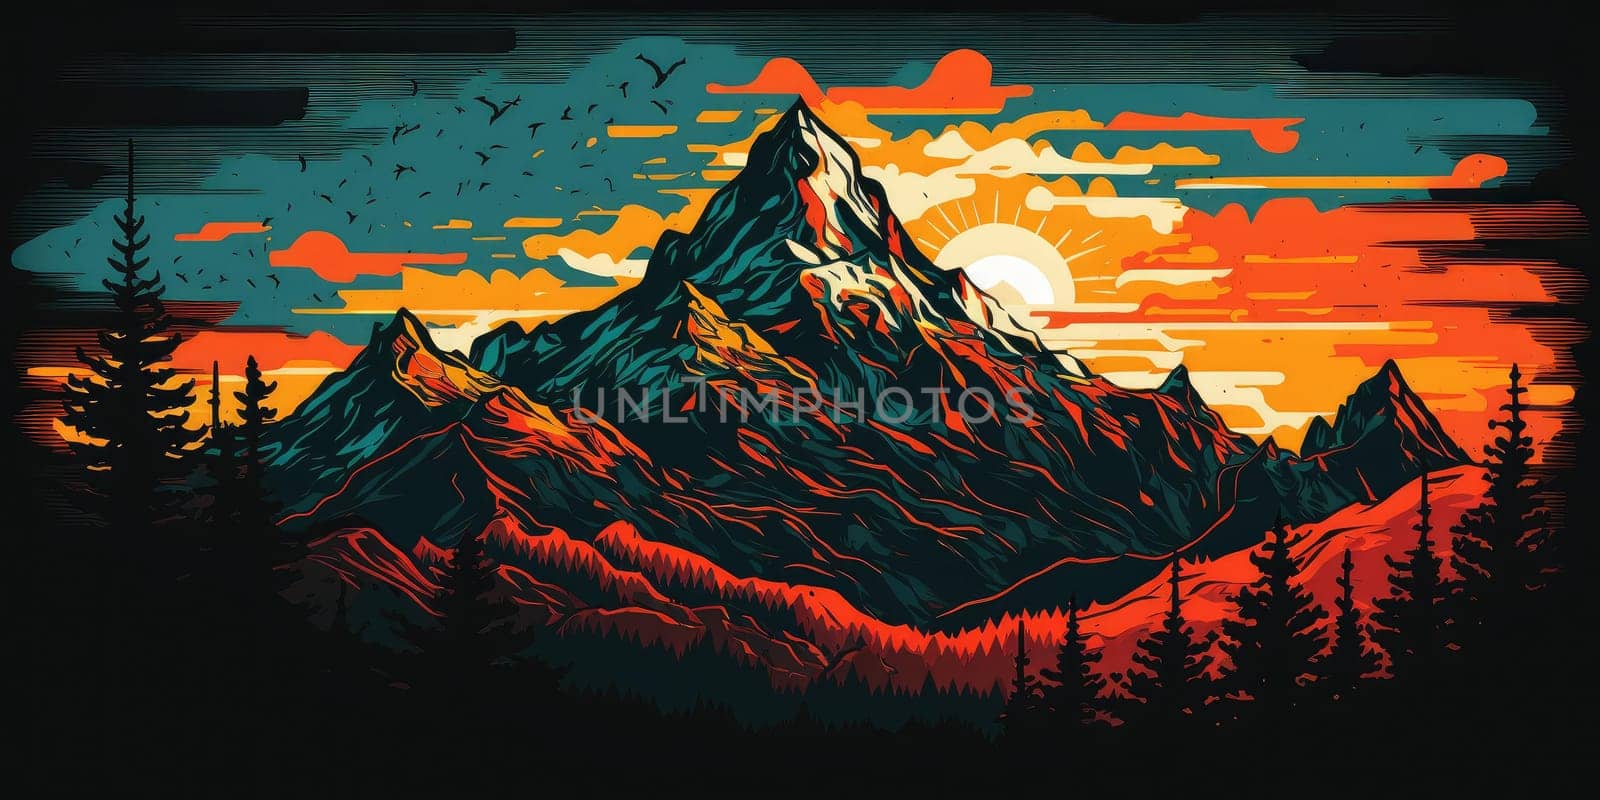 Sunrise over mountains landscape beautiful retro artistic style by biancoblue